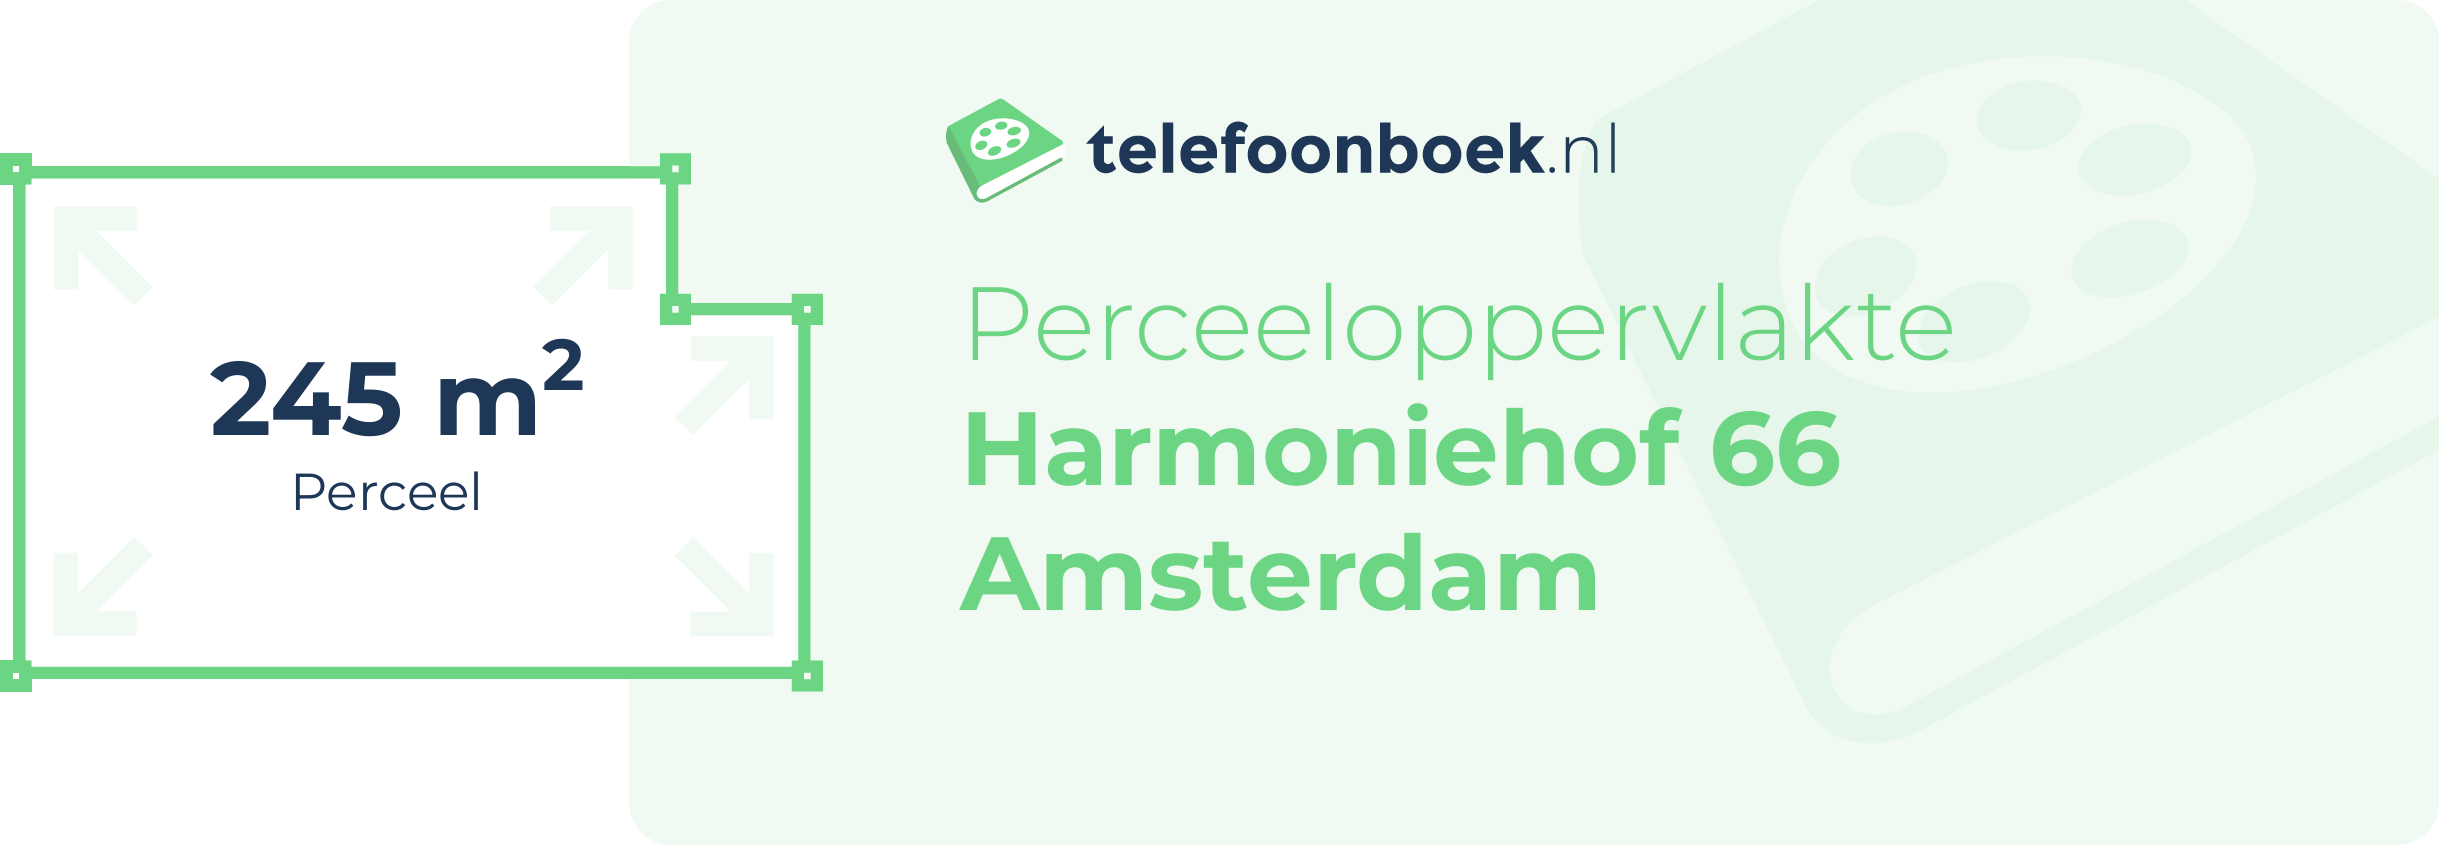 Perceeloppervlakte Harmoniehof 66 Amsterdam